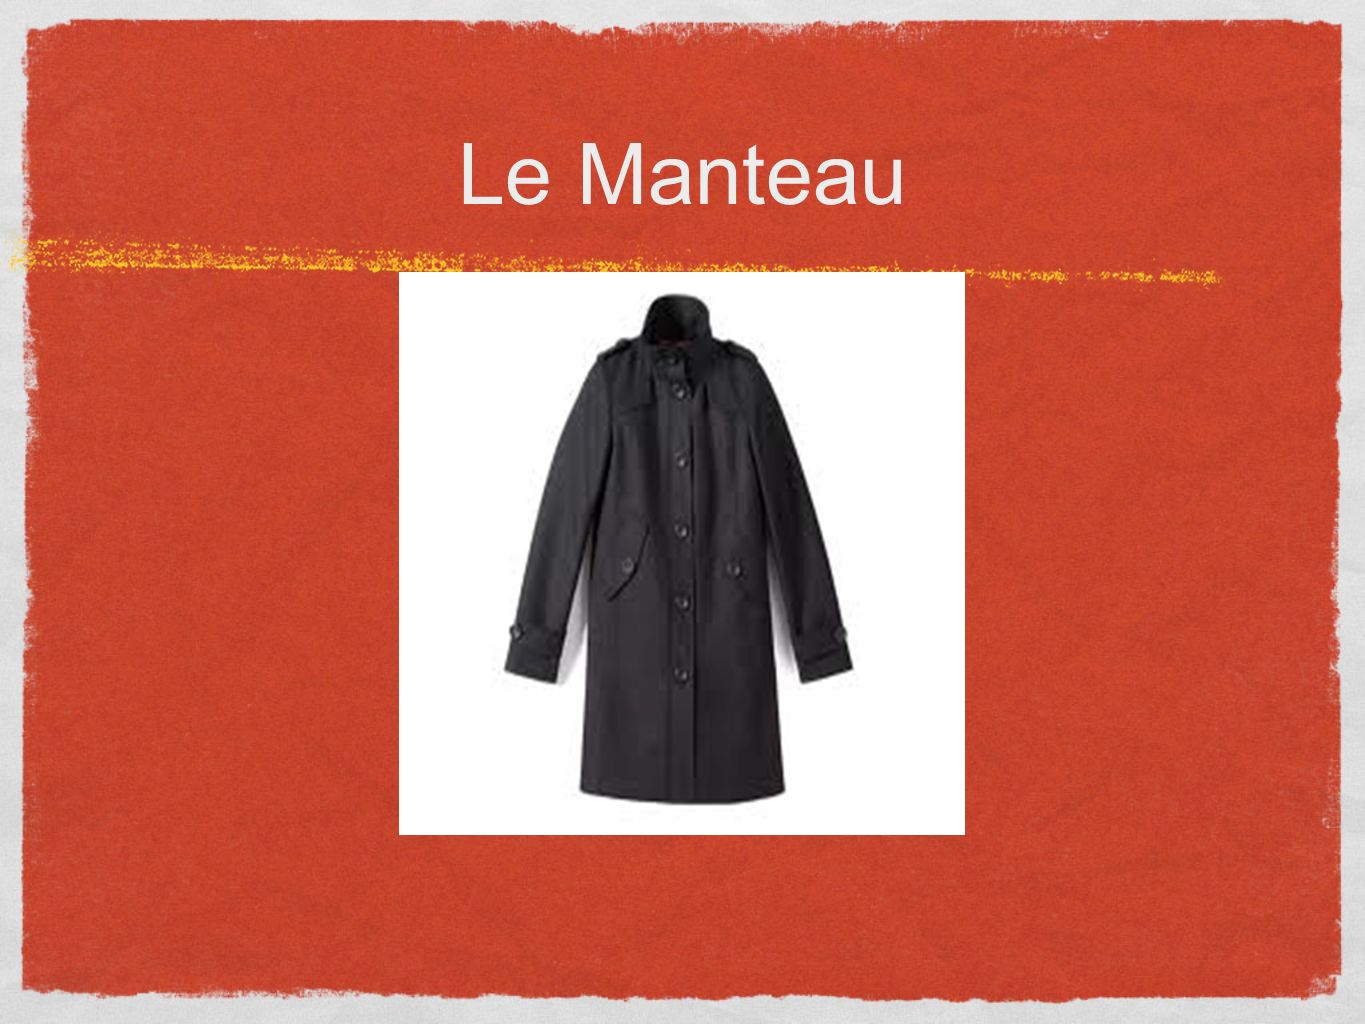 Le Manteau